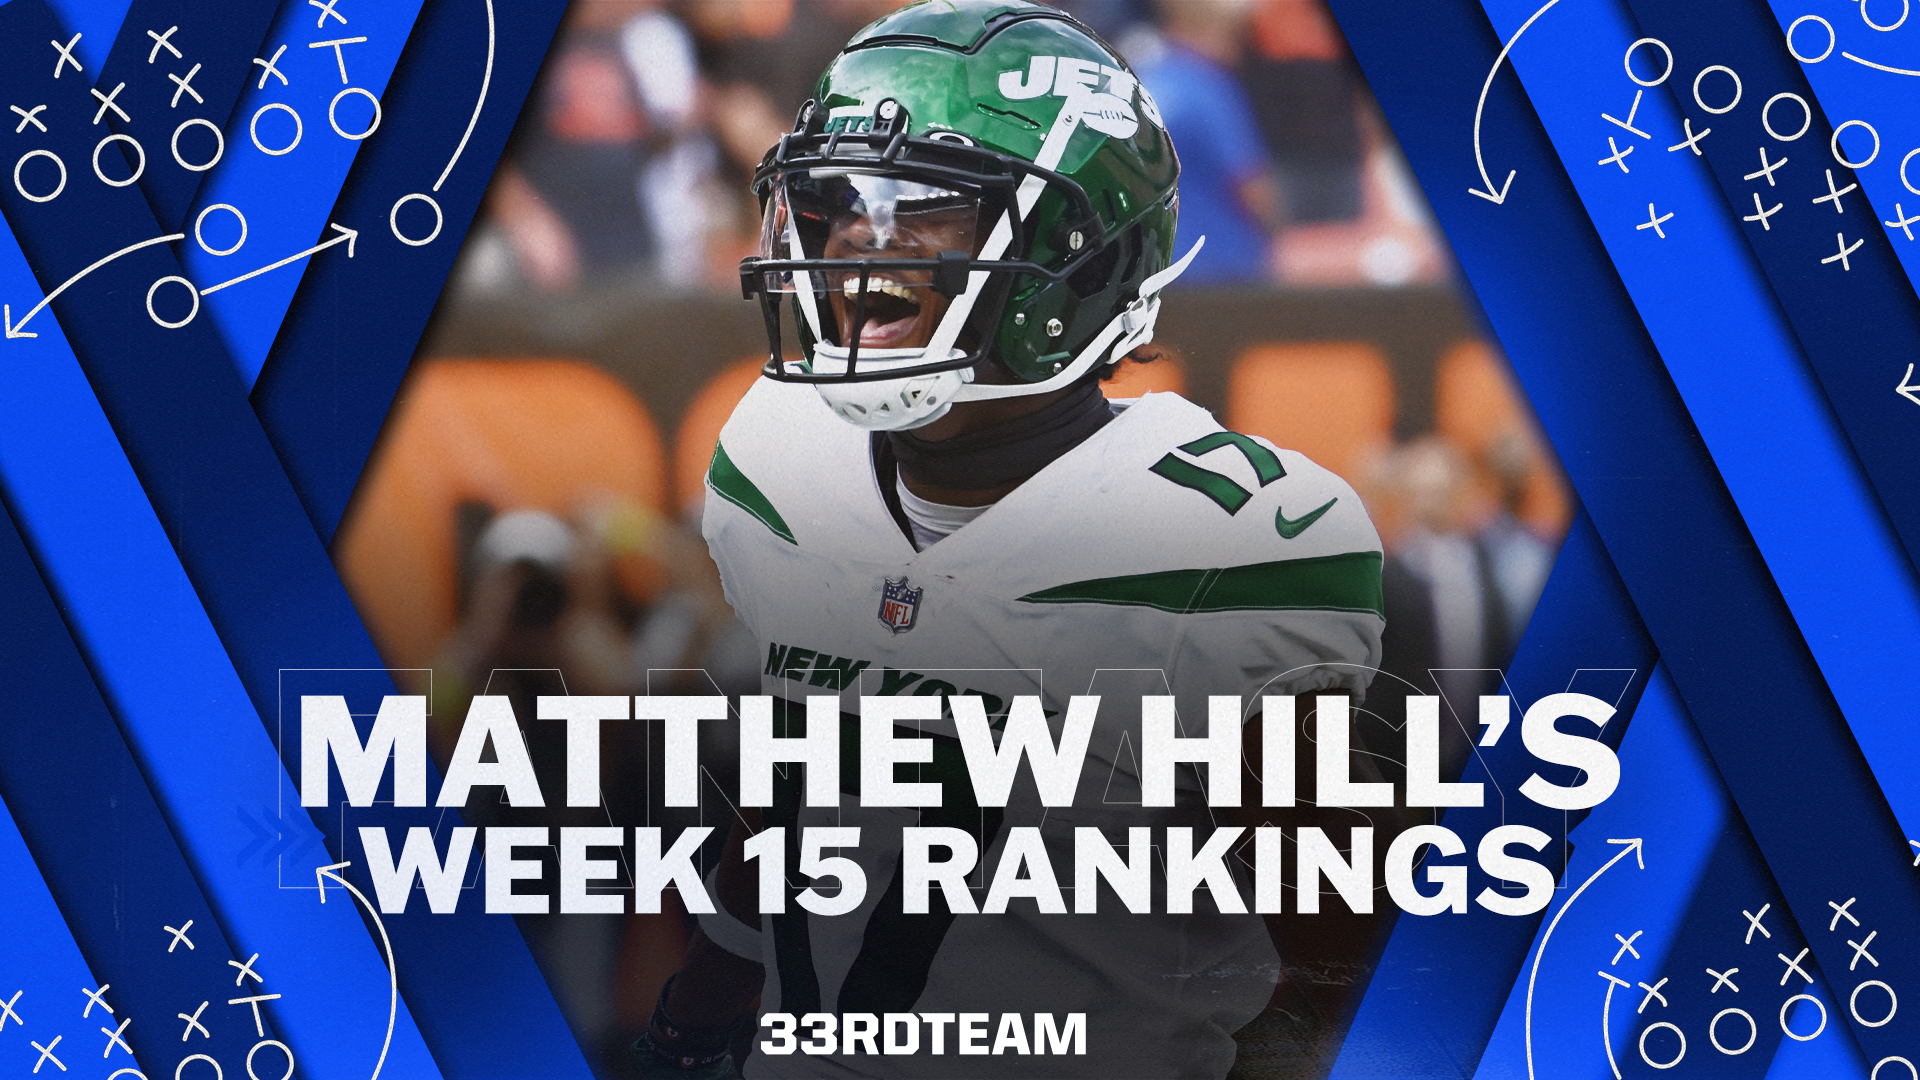 Hill’s NFL Week 15 Fantasy Football Rankings